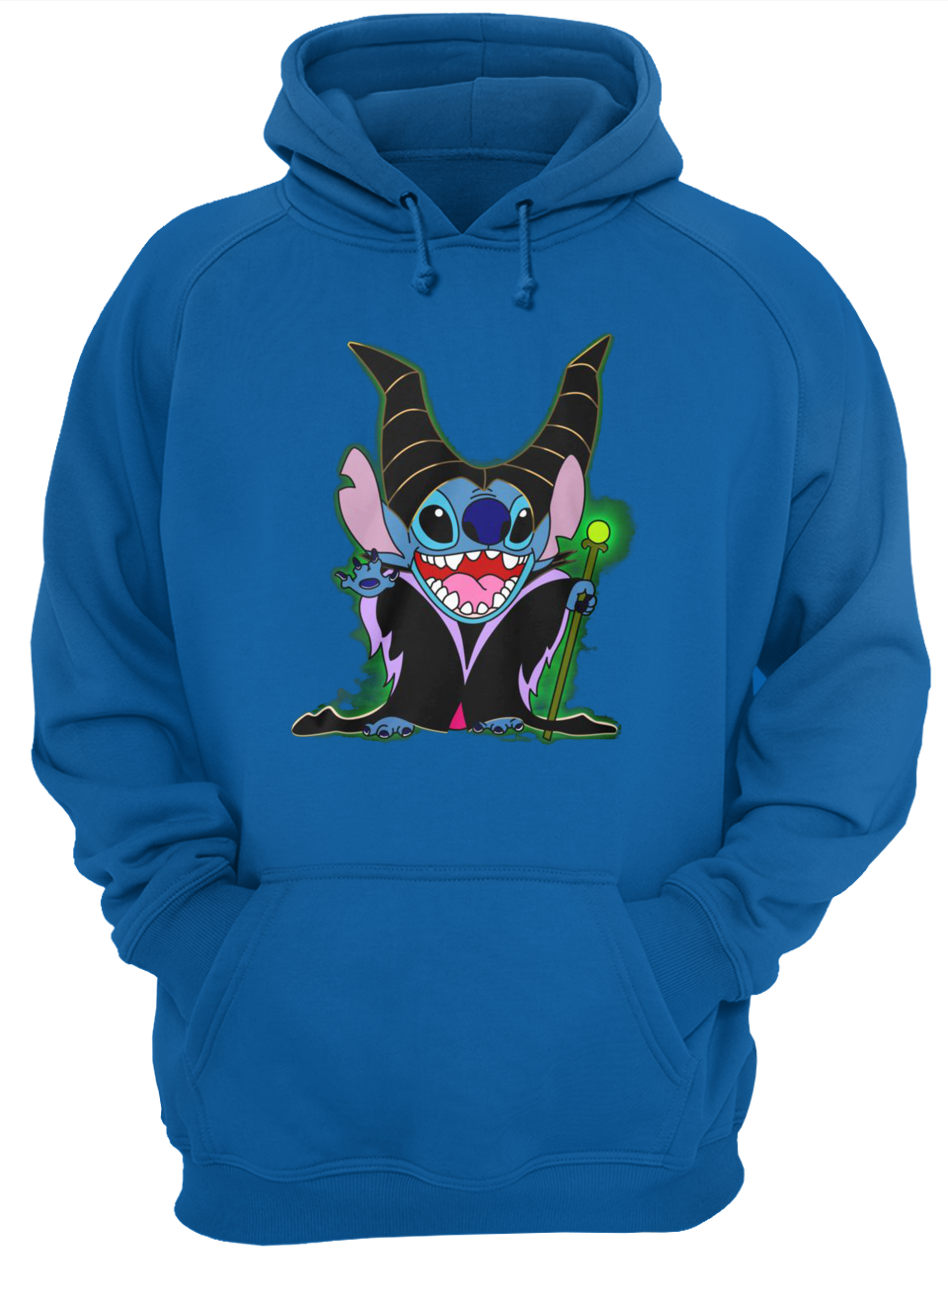 Disney stitch as maleficent hoodie